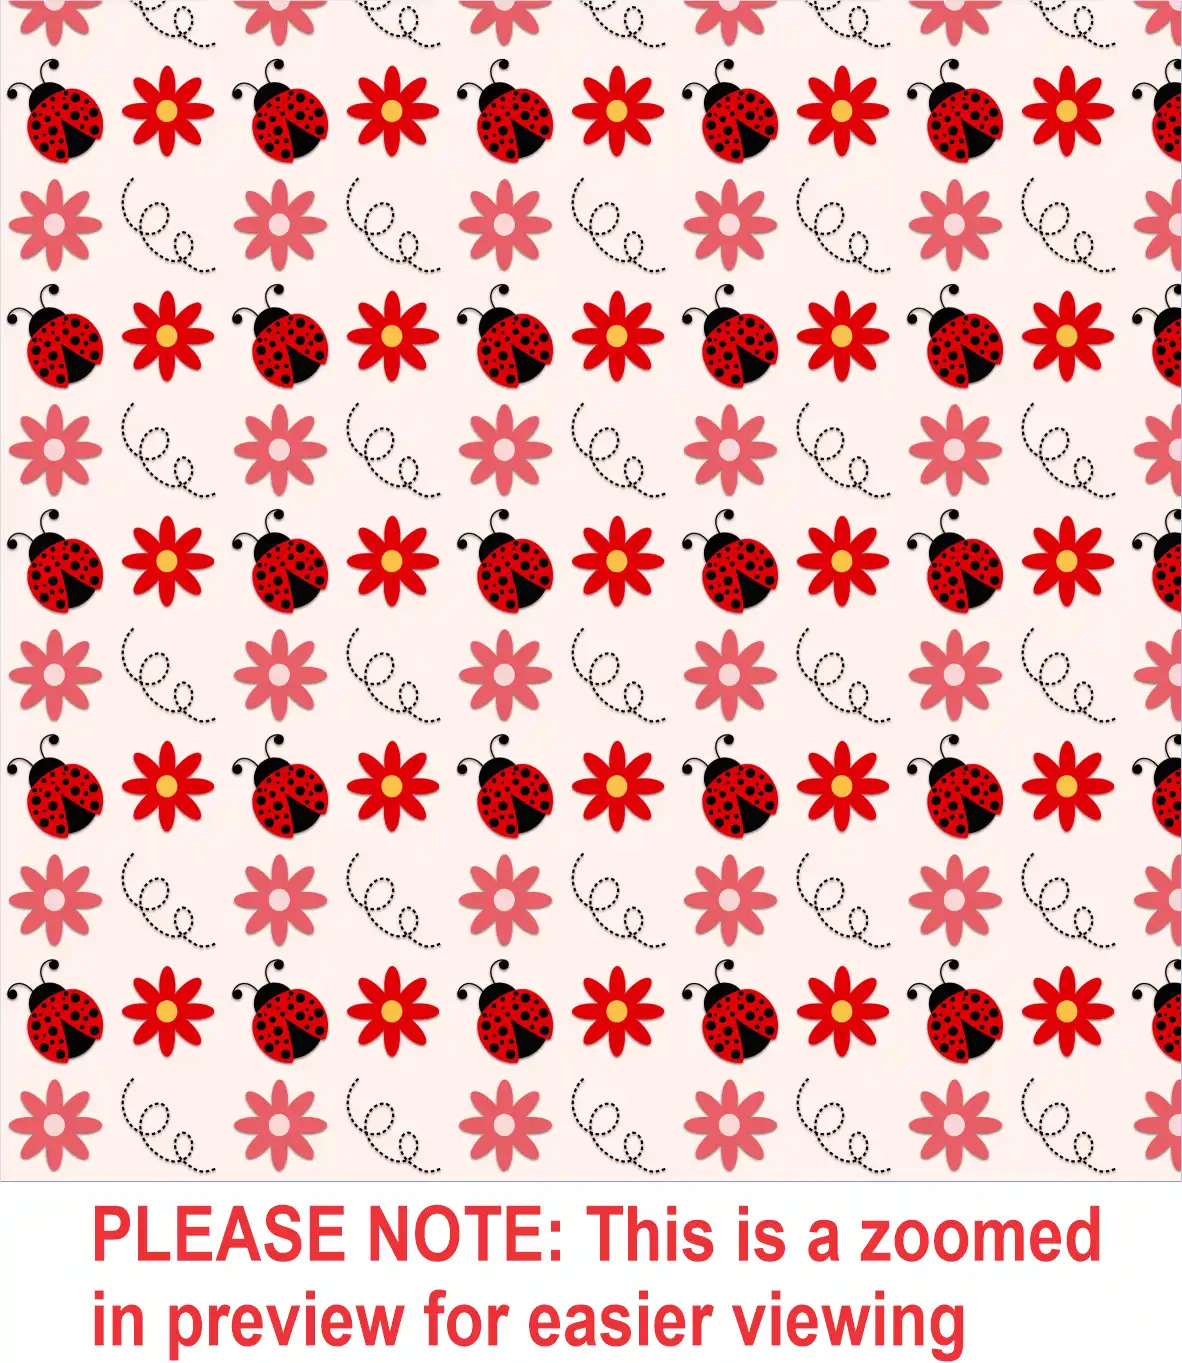 Ladybug theme pattern printed on Self Adhesive Vinyl (SAV), Heat Transfer Vinyl (HTV) and Cardstock.